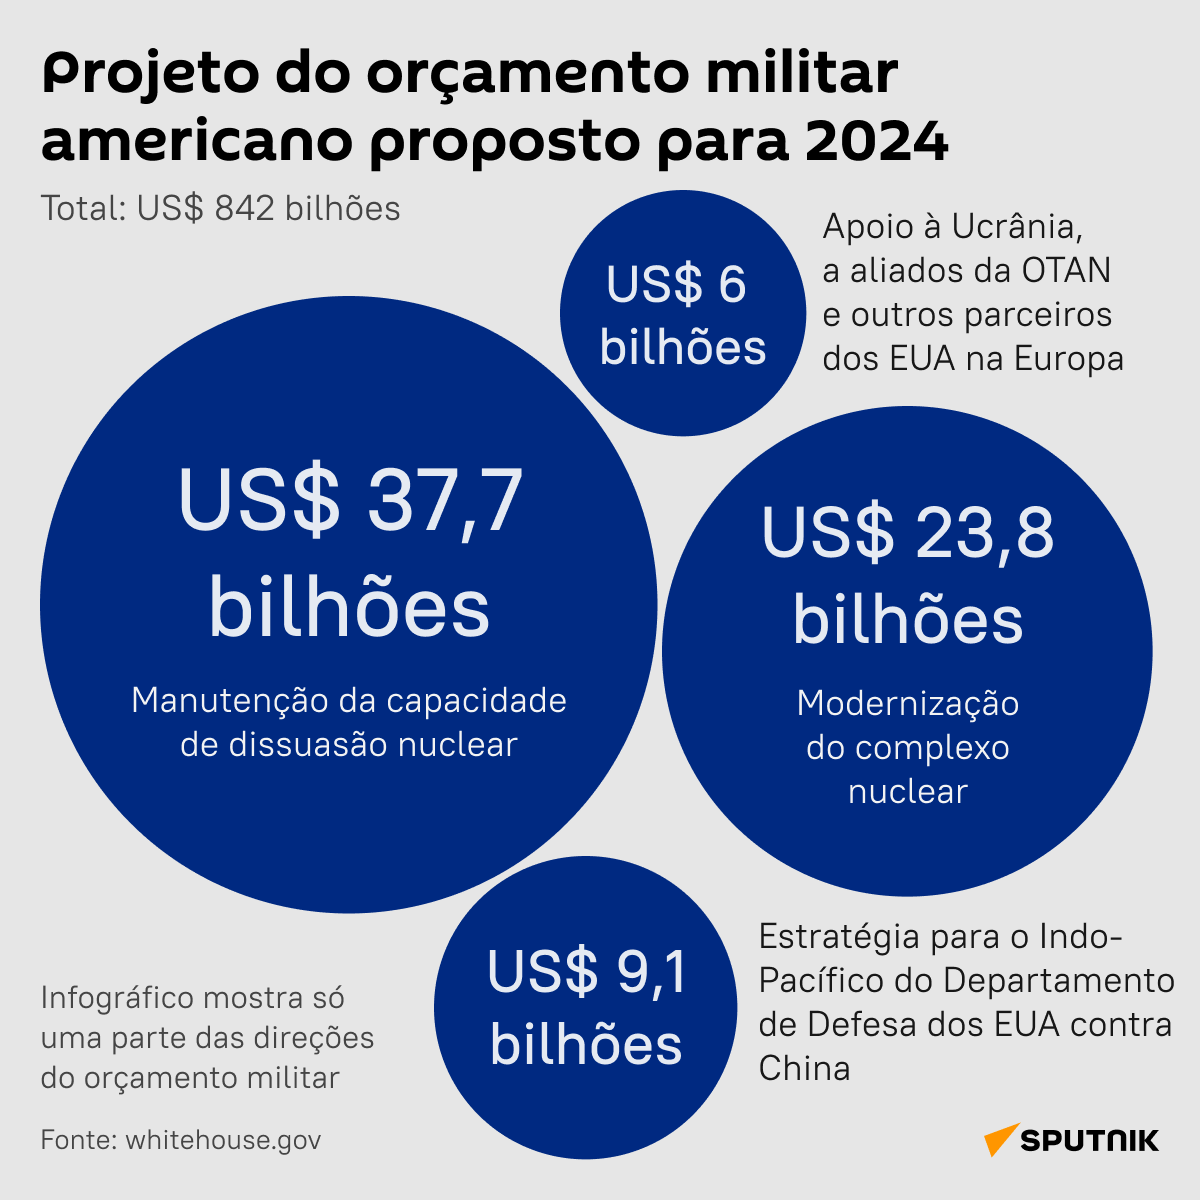 Projeto do orçamento militar proposto por Biden para 2024 - Sputnik Brasil